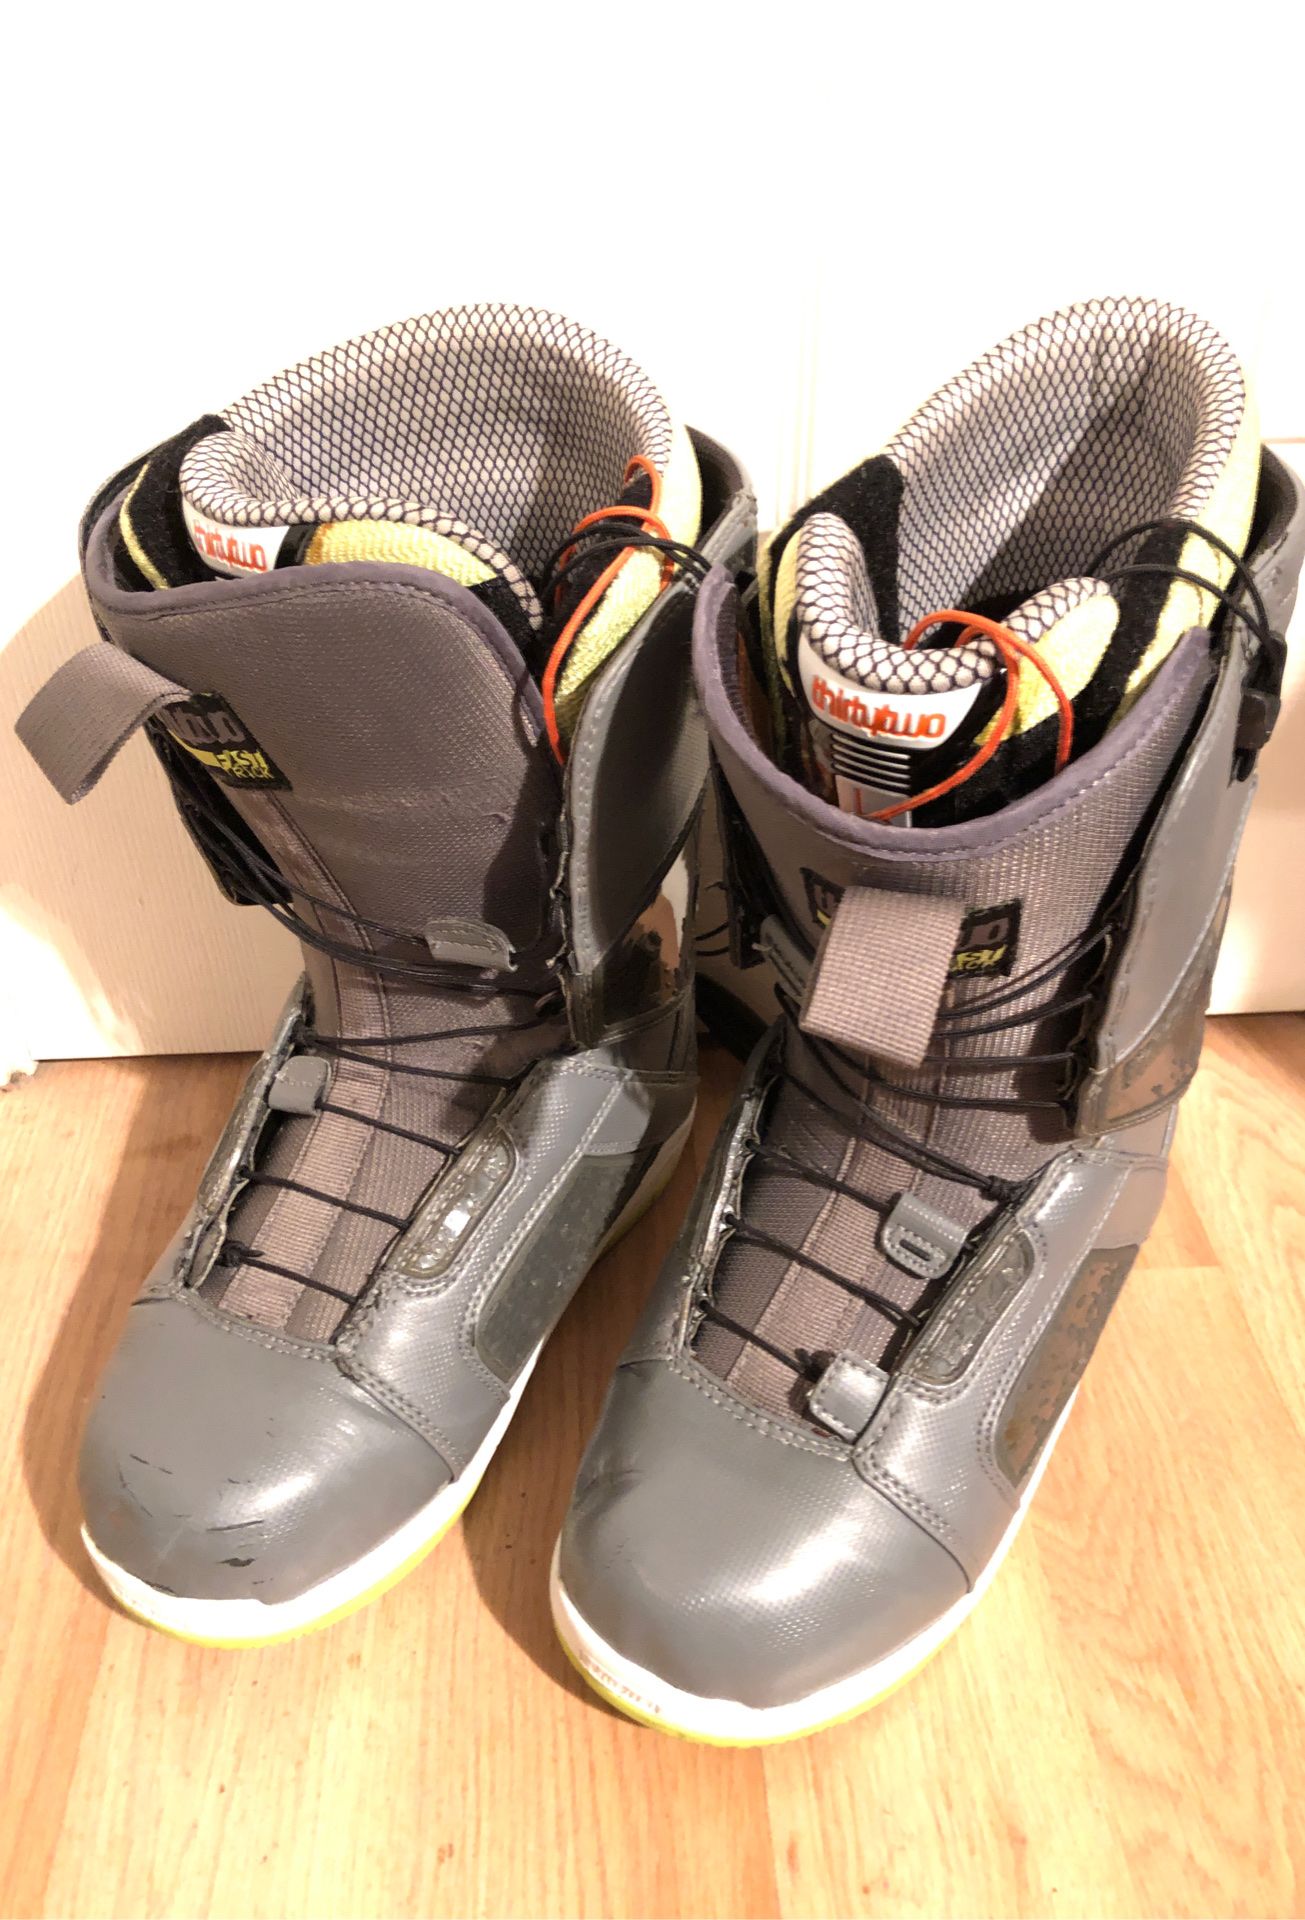 Men’ Snowboard Boots Thirtytwo size 10 Sonik FT